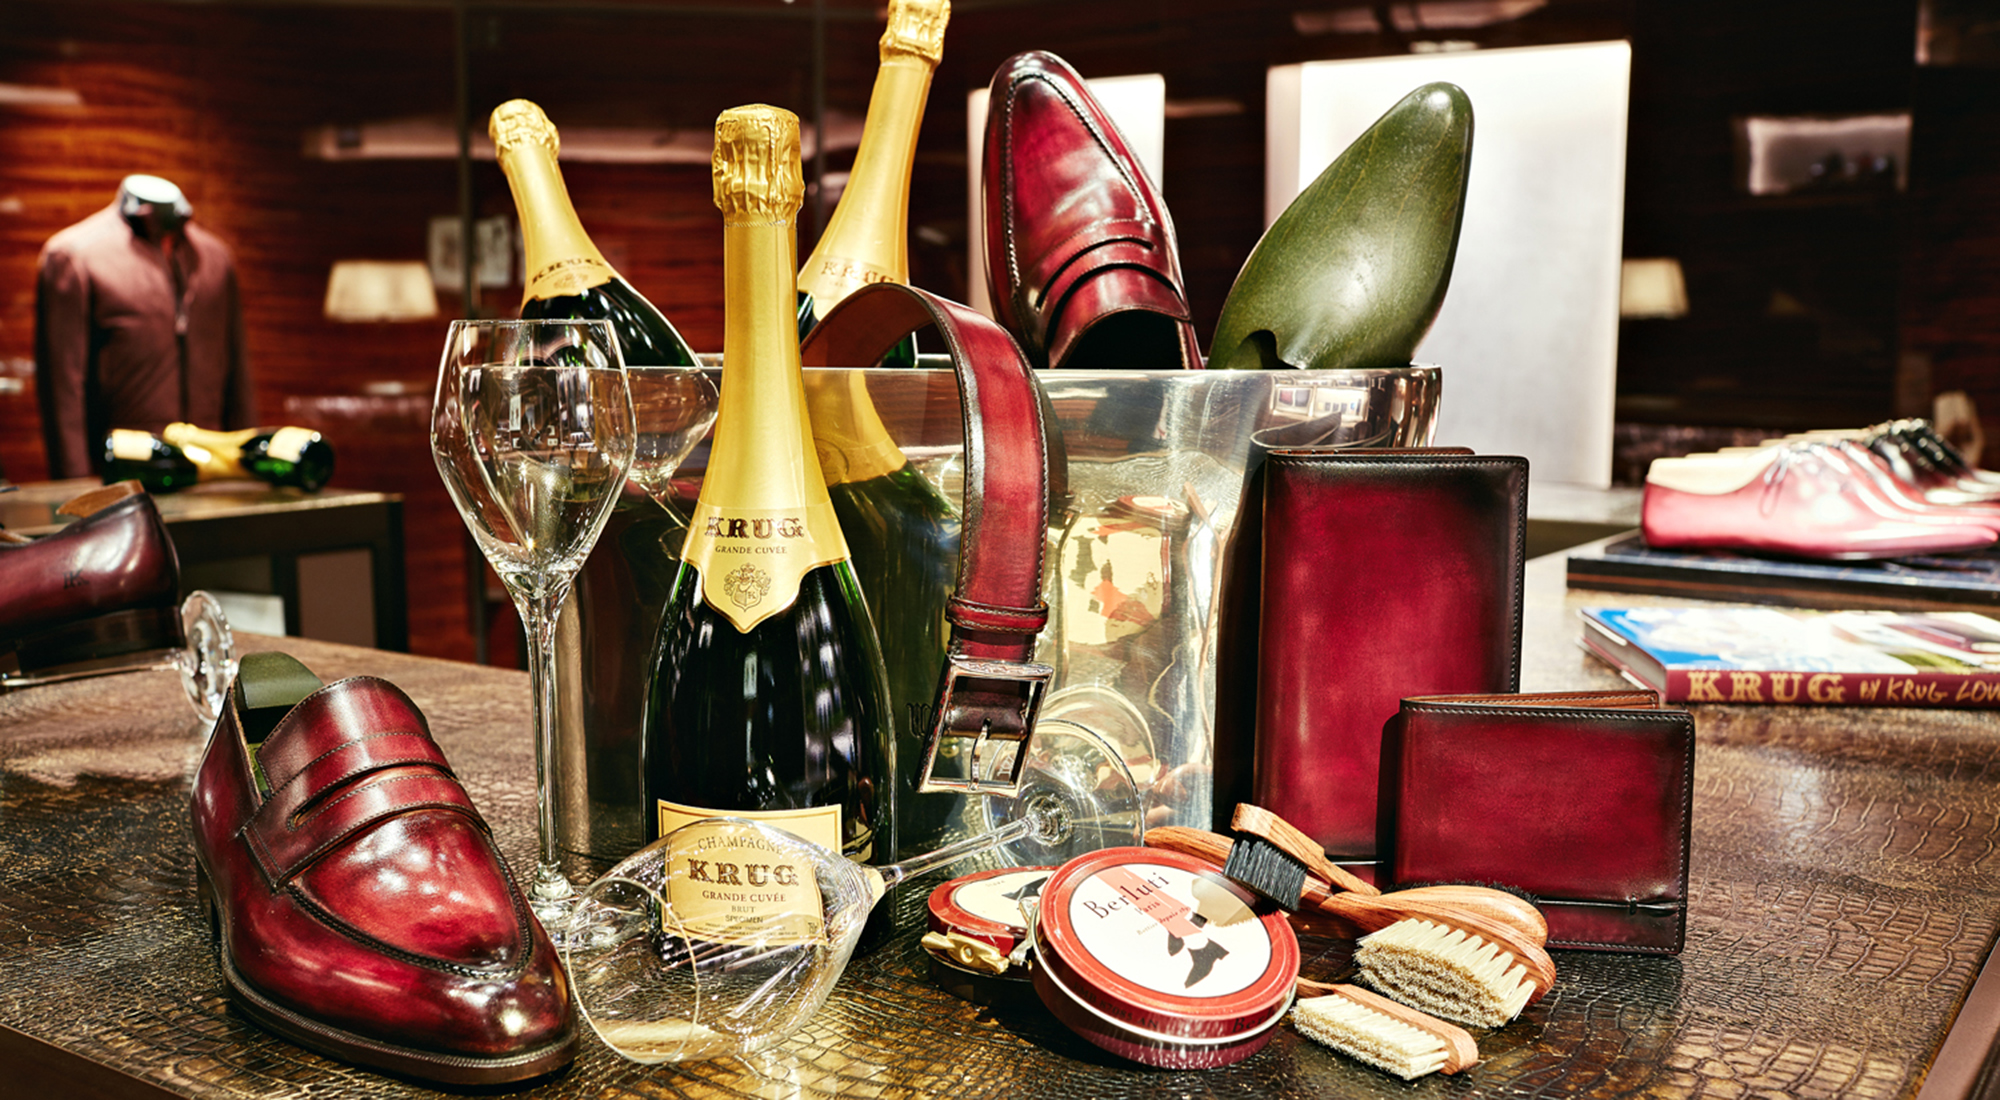 Krug Champagne - Le Club de l elegance - Champagne luxury